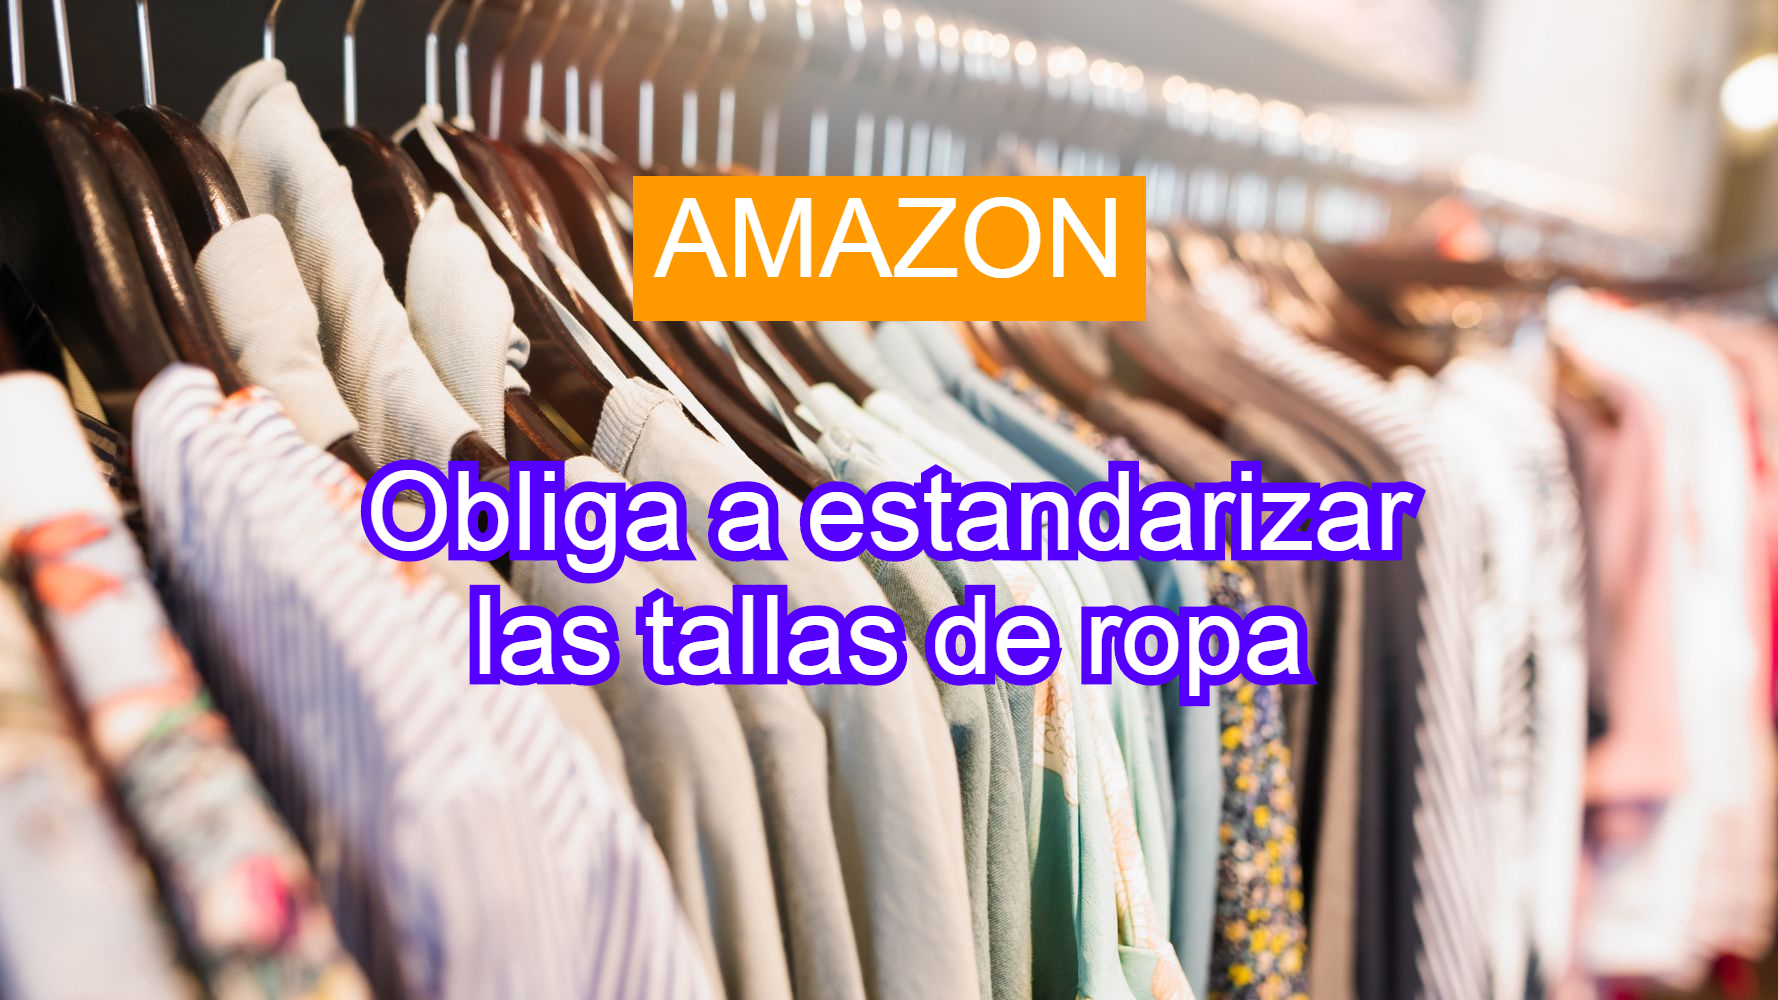 Amazon estandariza las tallas de ropa obligatoriamente -